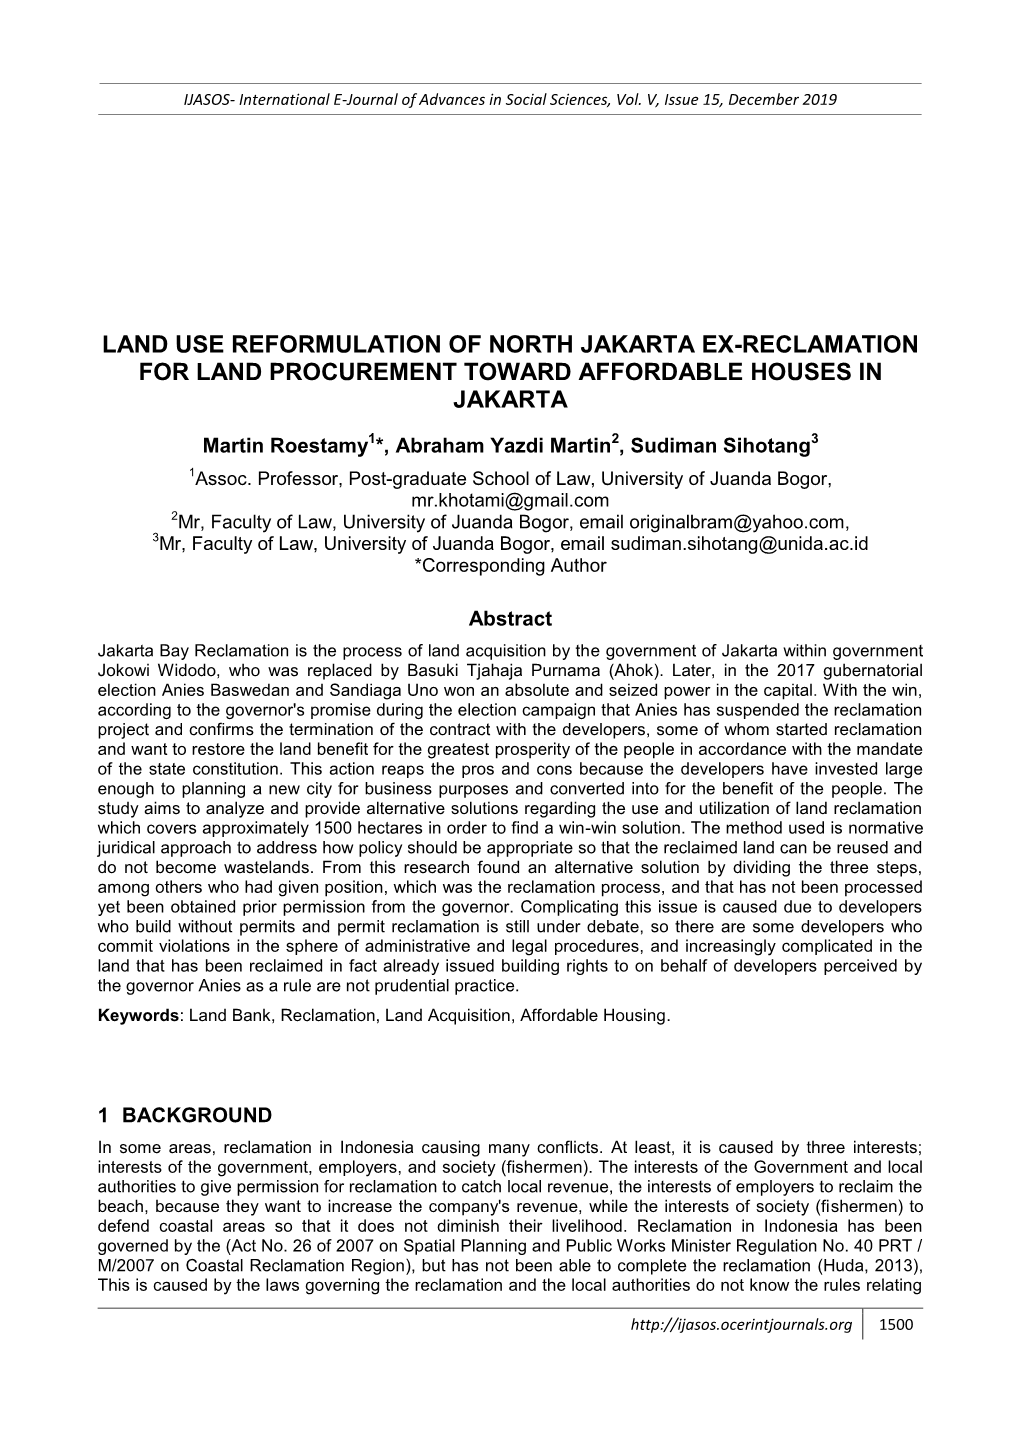 Land Use Reformulation of North Jakarta Ex-Reclamation for Land Procurement Toward Affordable Houses in Jakarta